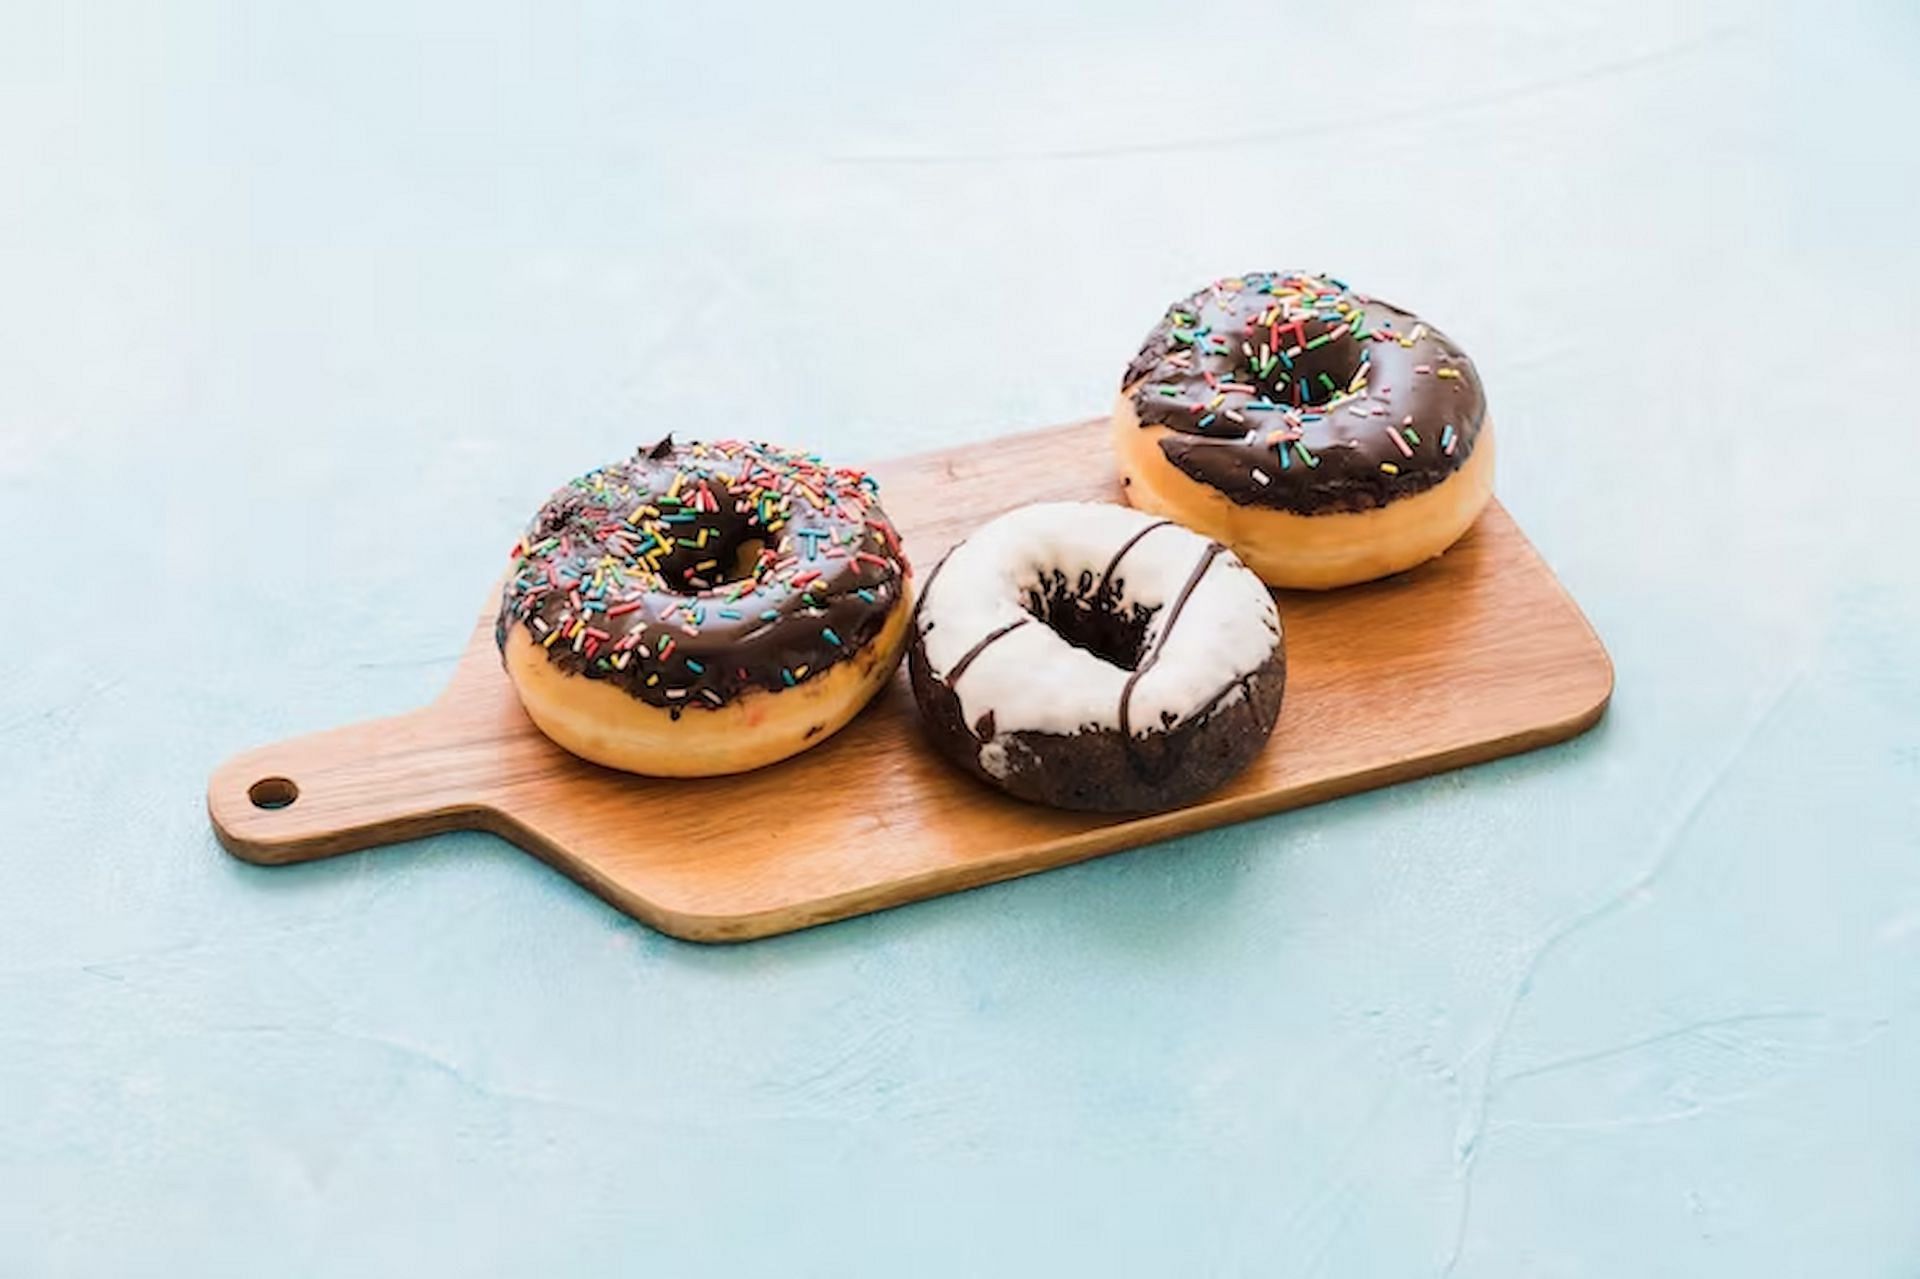 The Sam Sulek diet comprises daily indulgences like Krispy Kreme Donuts (Image via freepik)